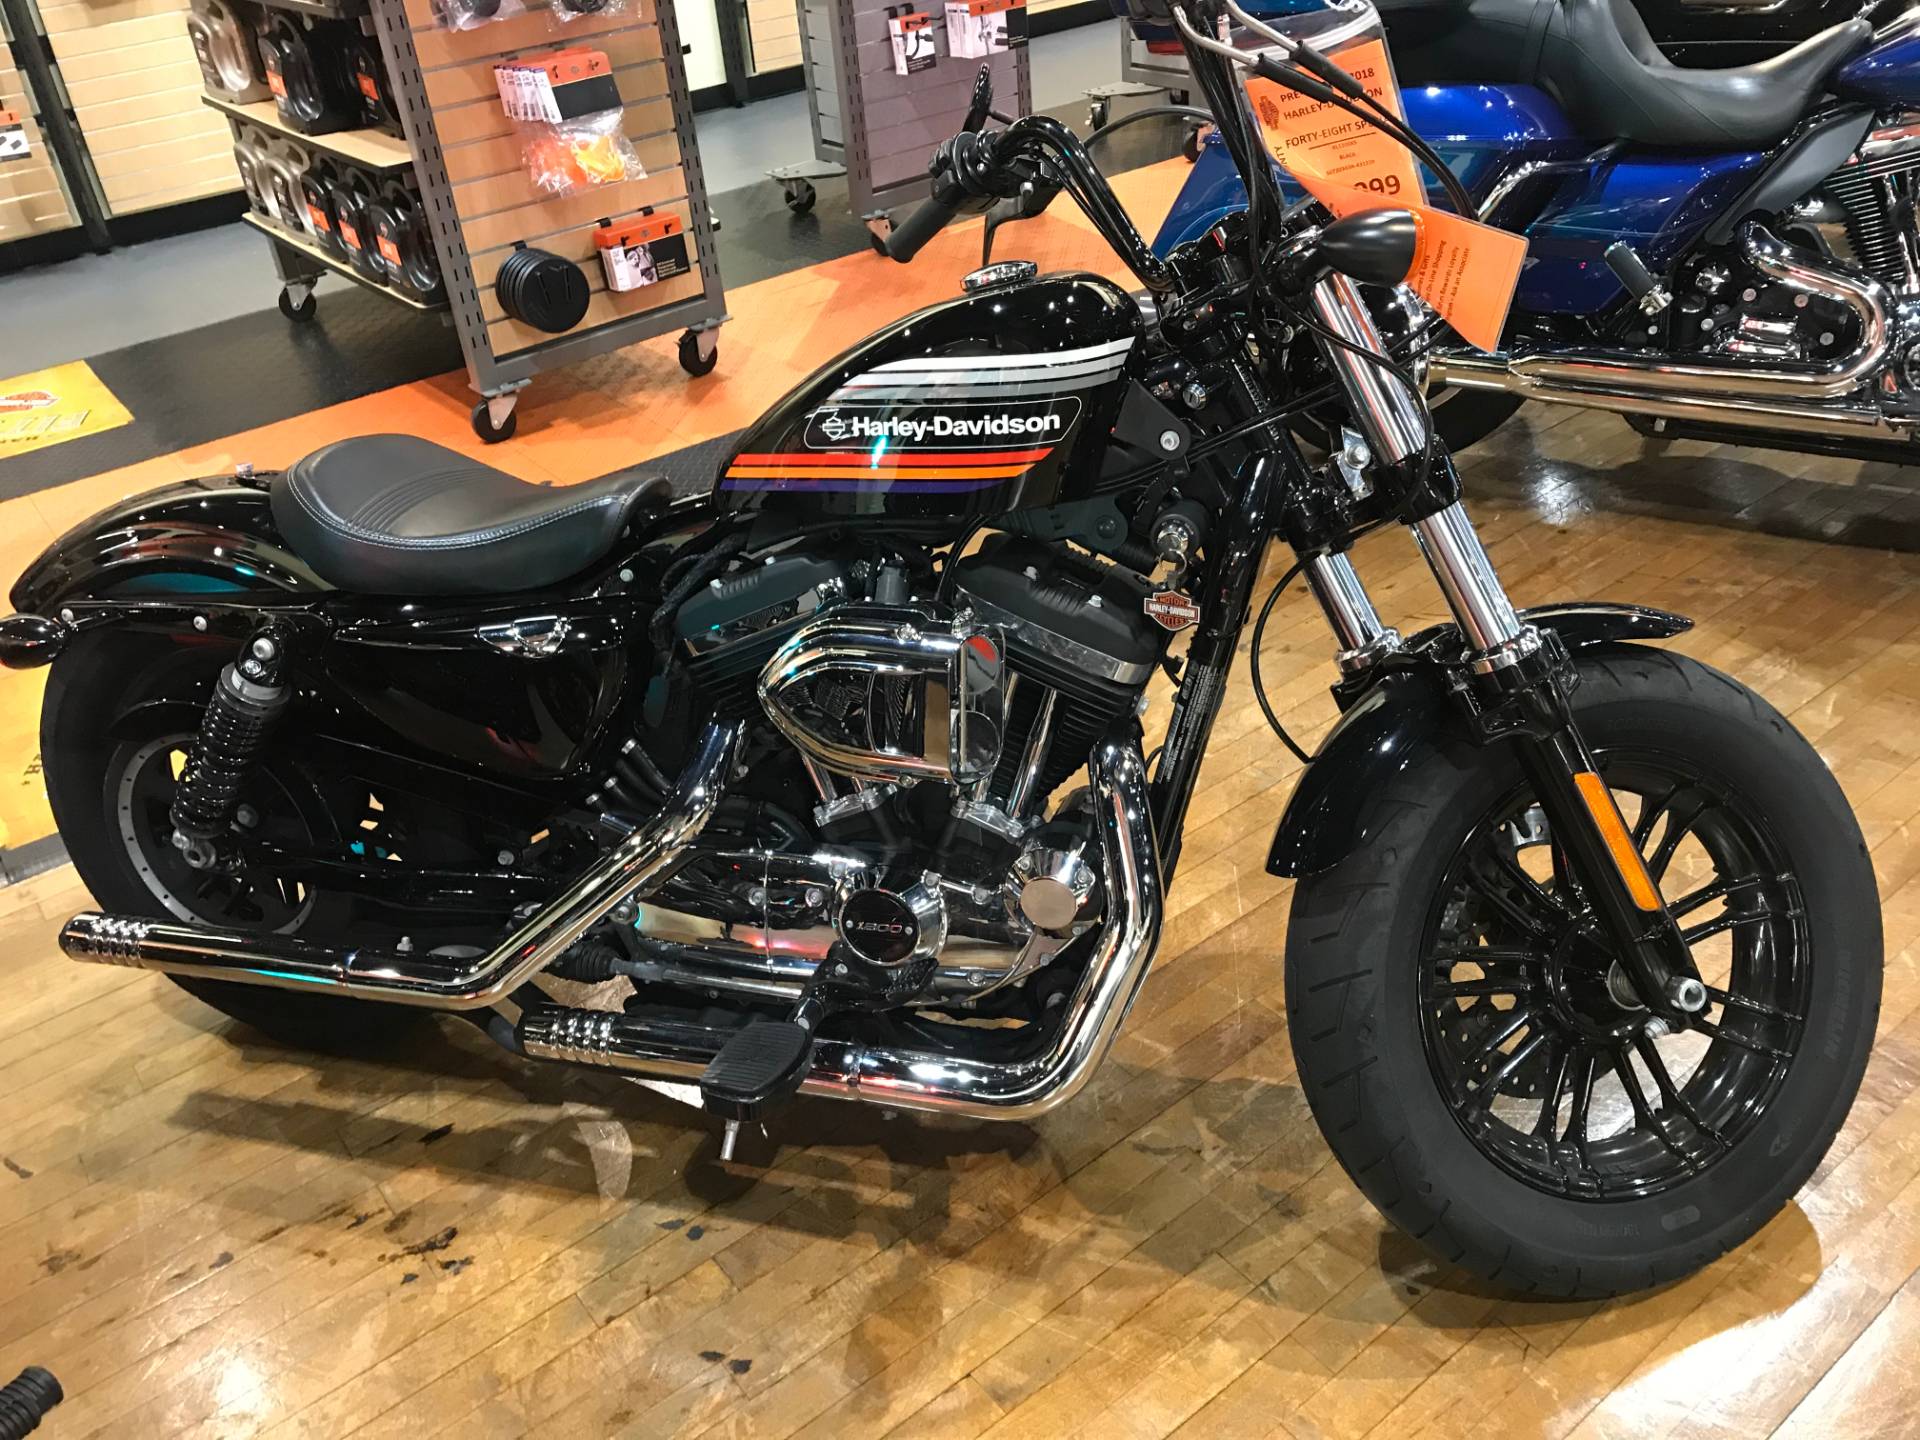 Used 2018 Harley Davidson Sportster 48 Special Vivid Black Motorcycles In Lakewood Nj S0720343a